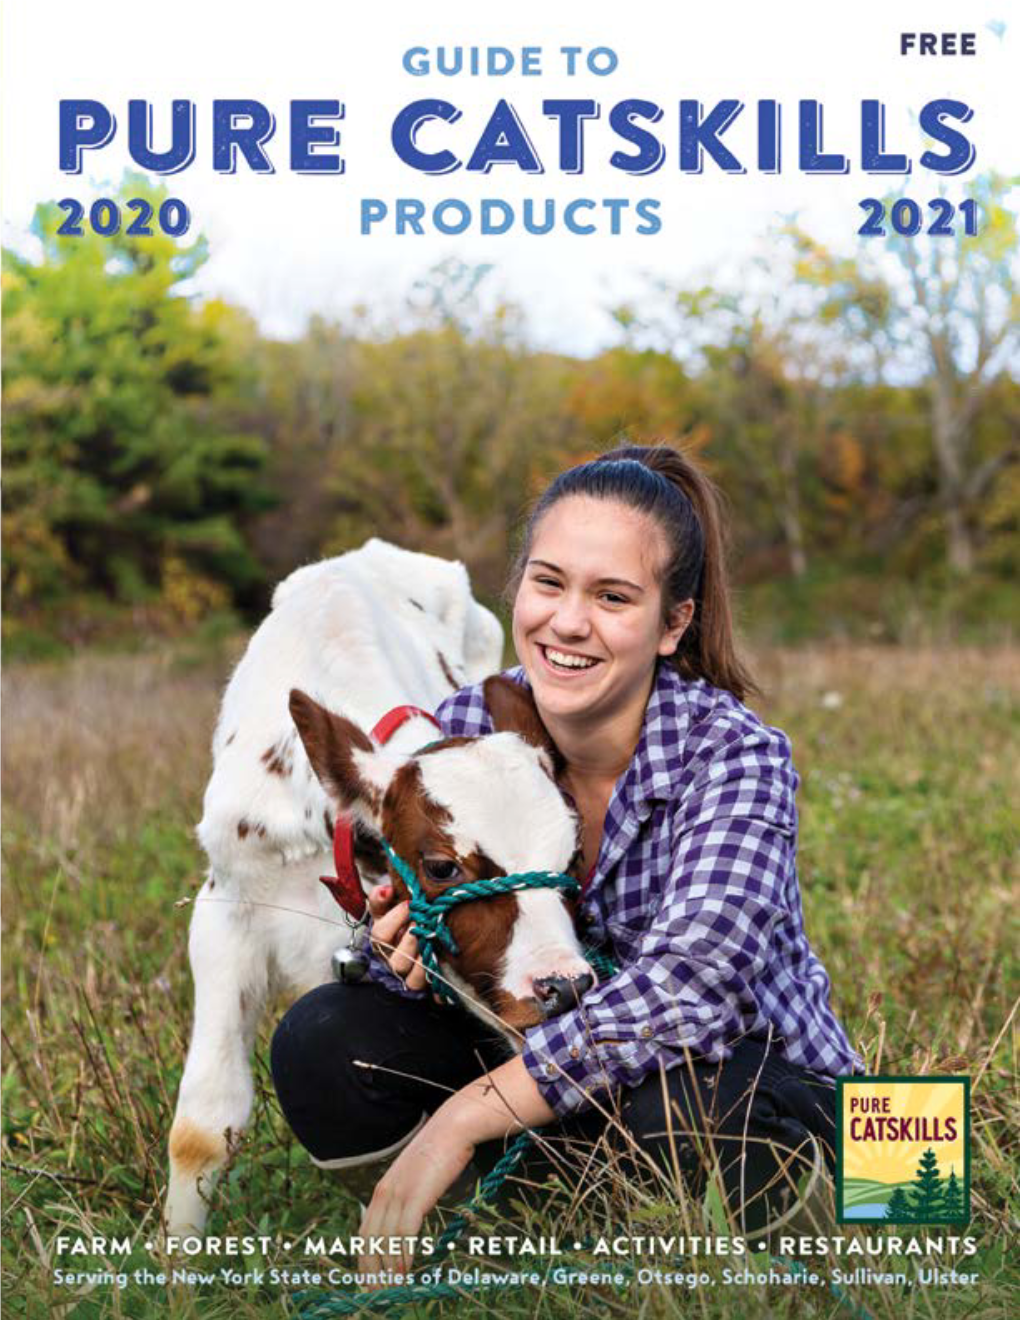 2020-2021 Guide to Purecatskills Products.Pdf